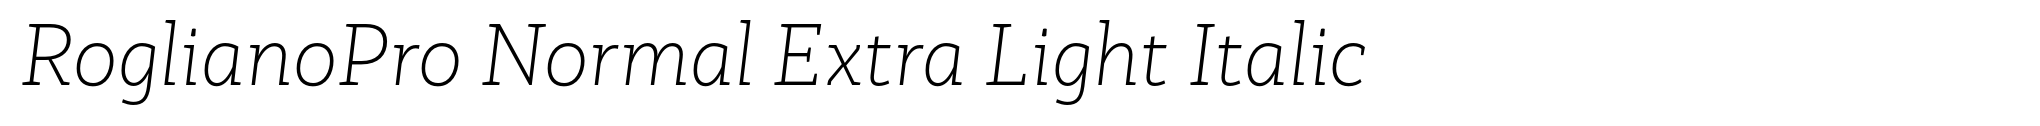 RoglianoPro Normal Extra Light Italic image